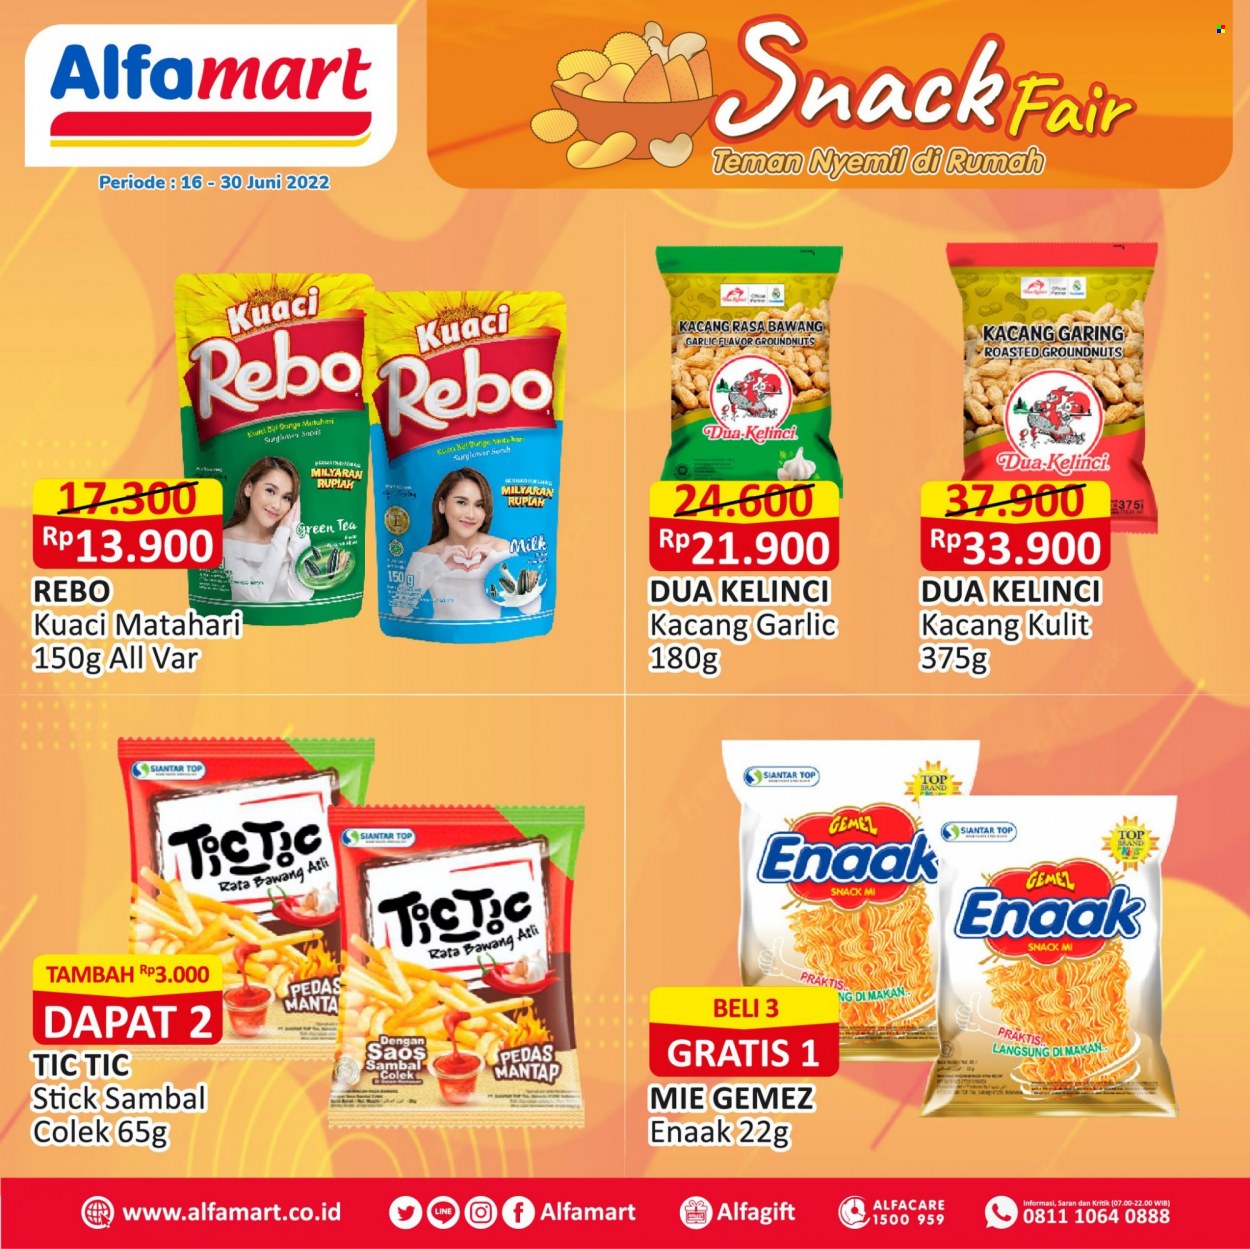 Promo Alfamart - 06/16/2022 - 06/30/2022 - Produk diskon - milk, top, tea, sambal, rebo, manta, kacang, garlic, green tea, bawang, snack. Halaman 1.